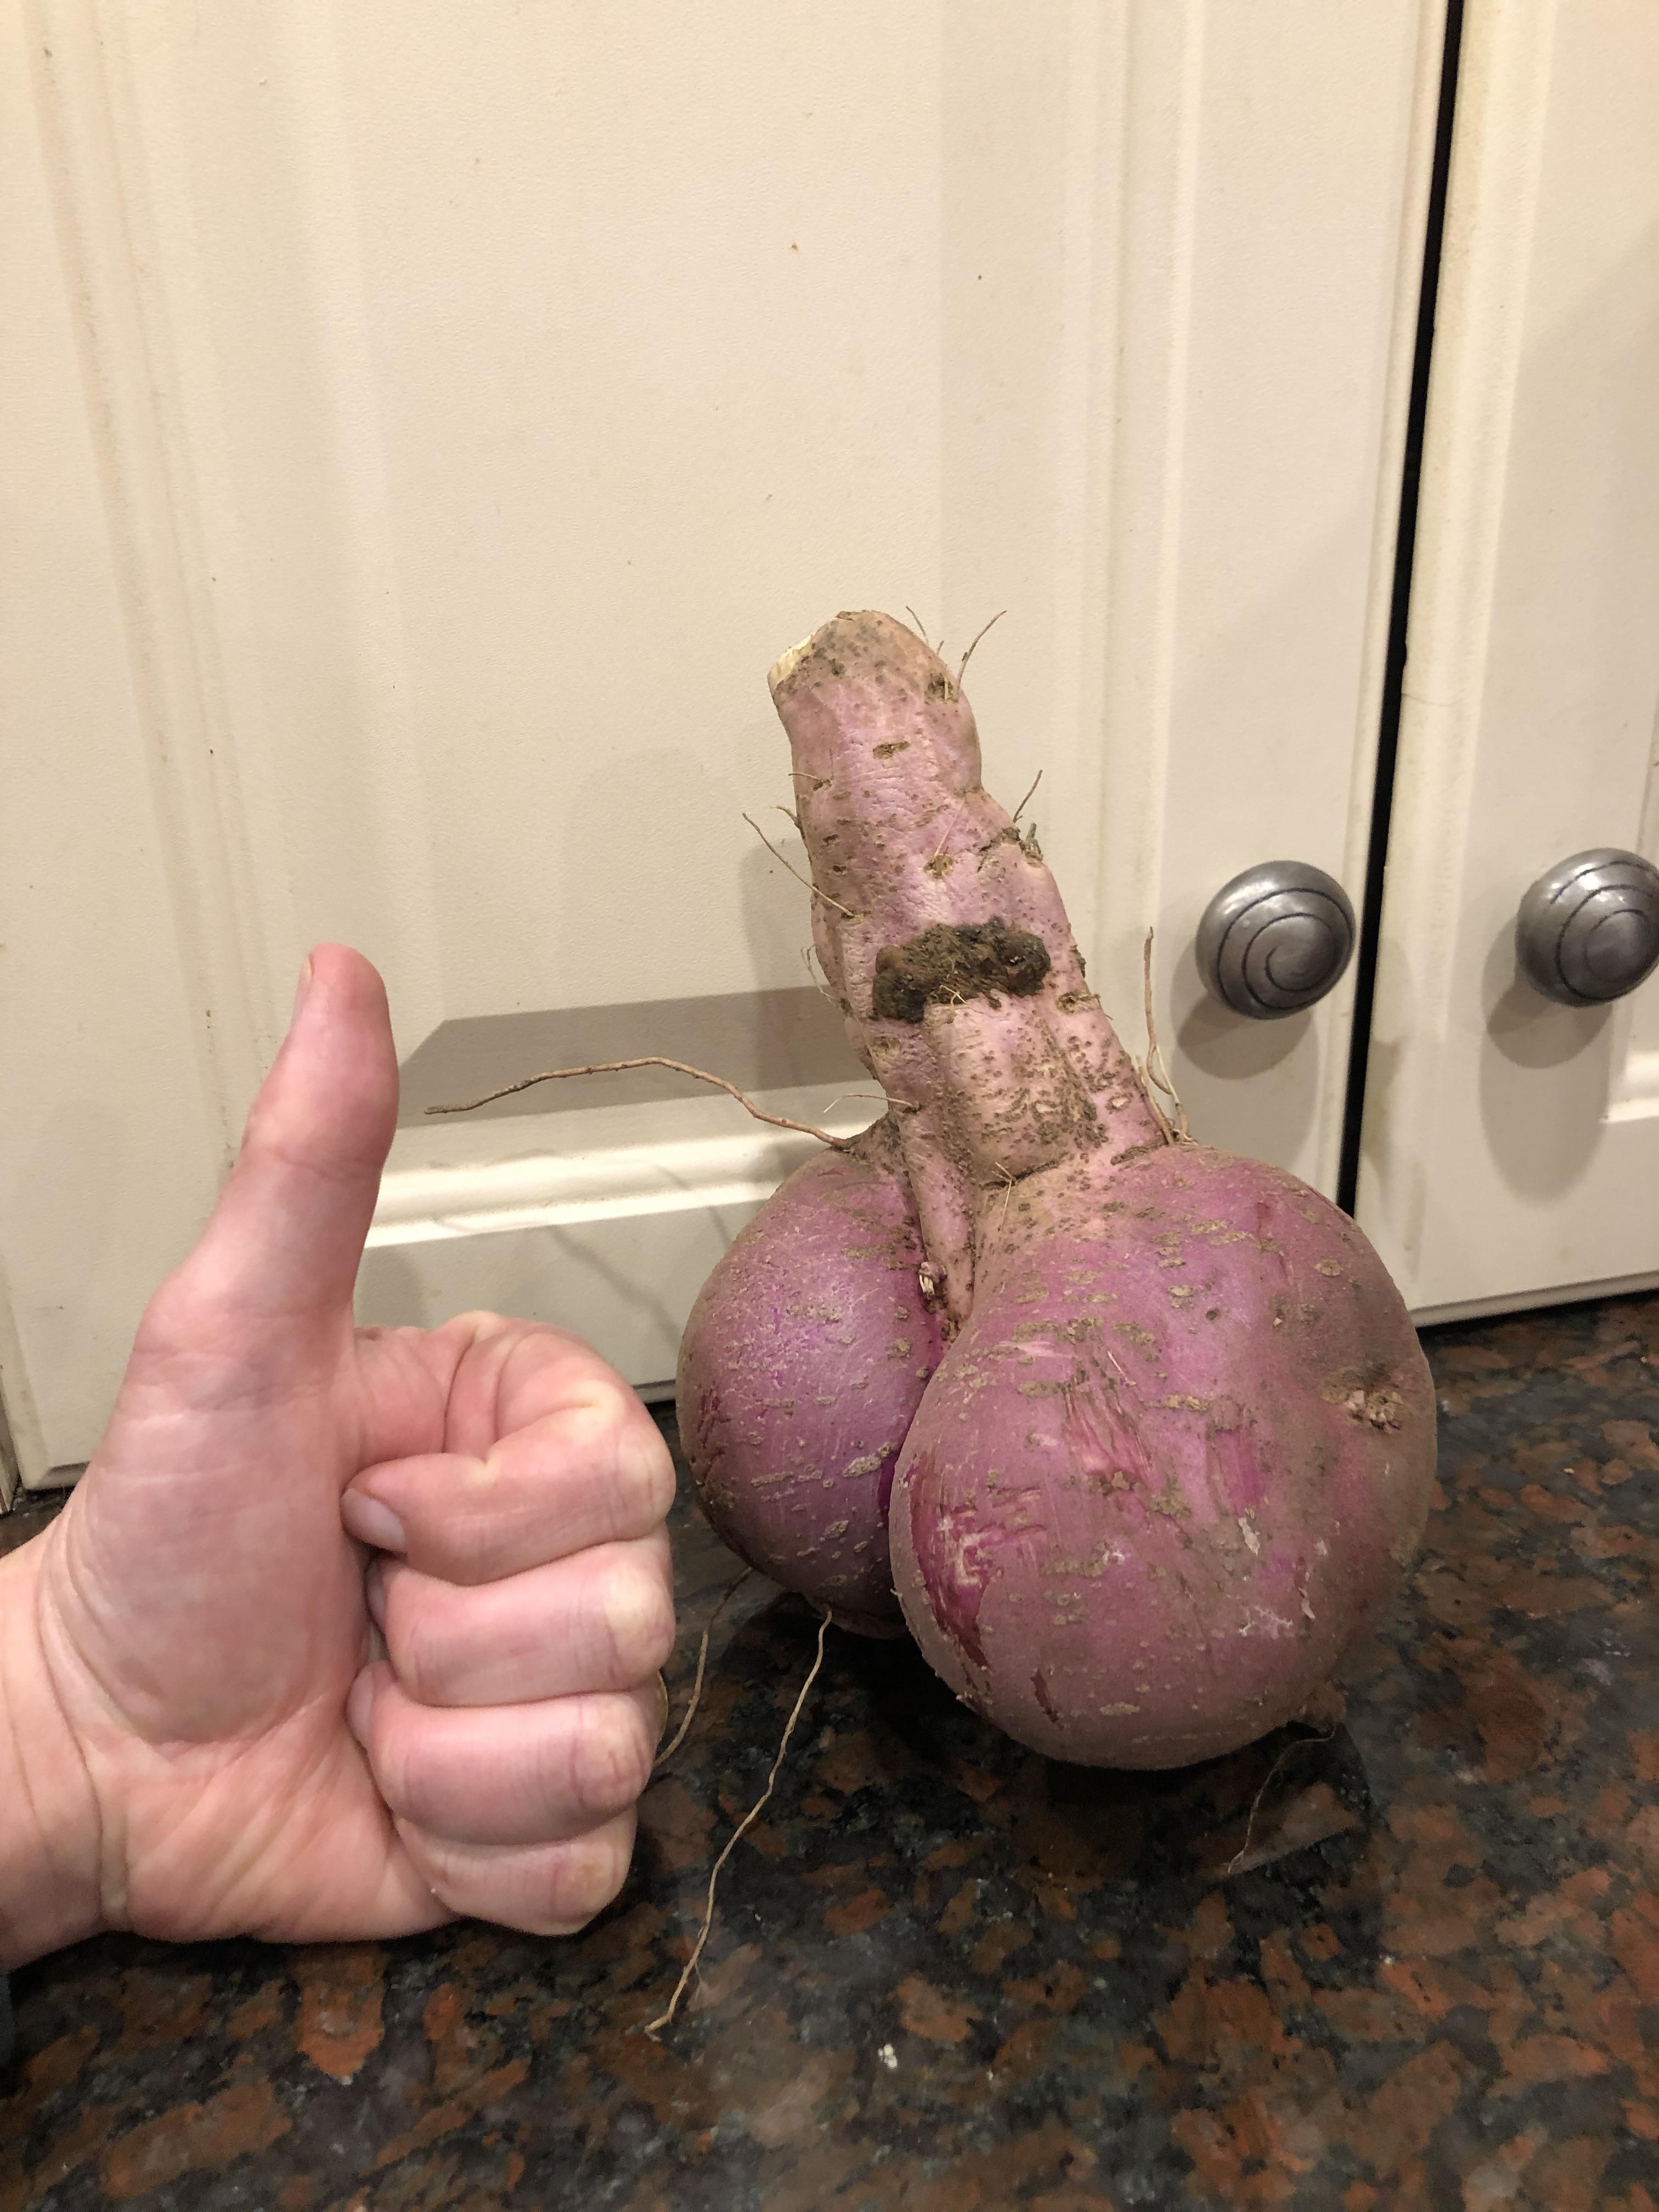 We grew an interesting sweet potato...